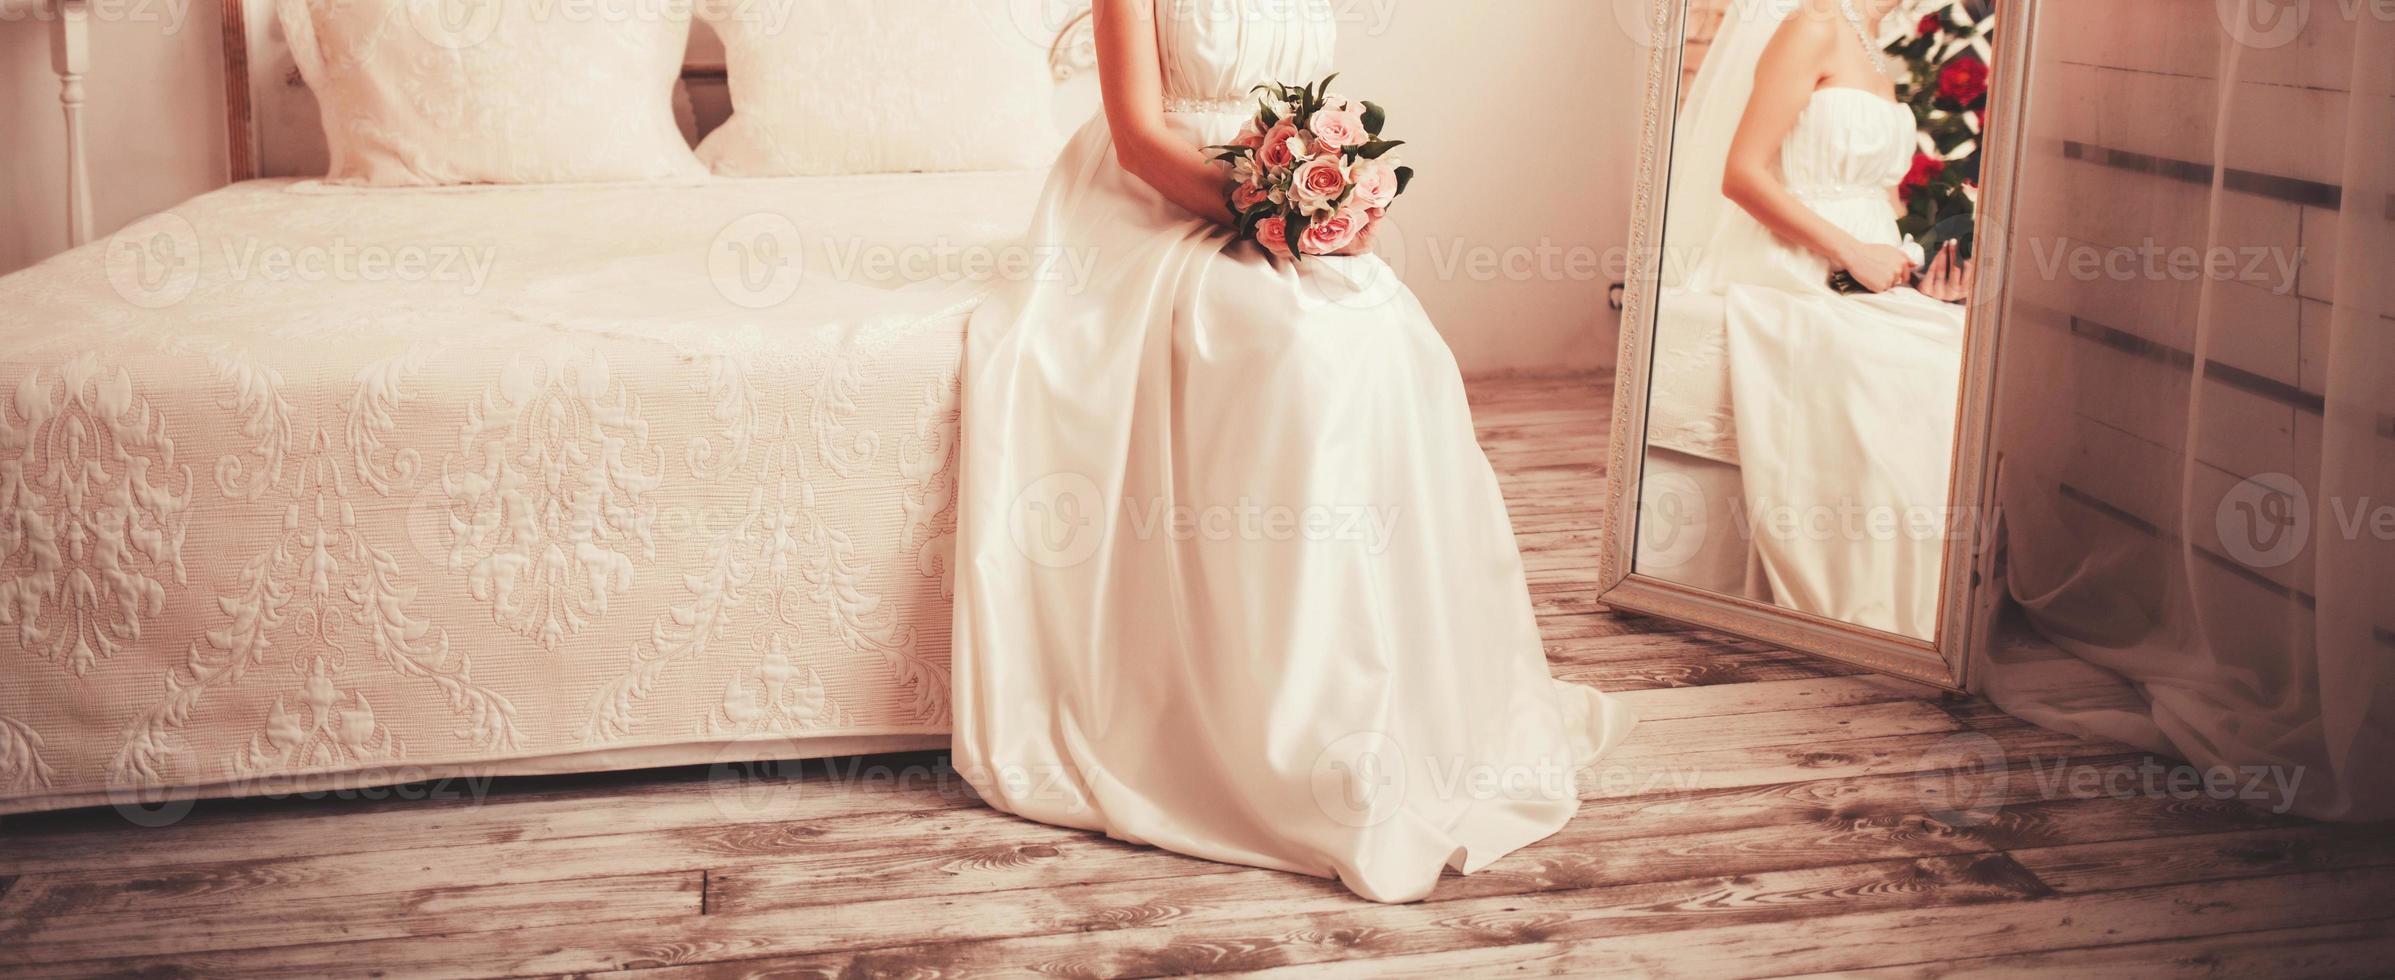 beautiful bride in a wedding dress photo